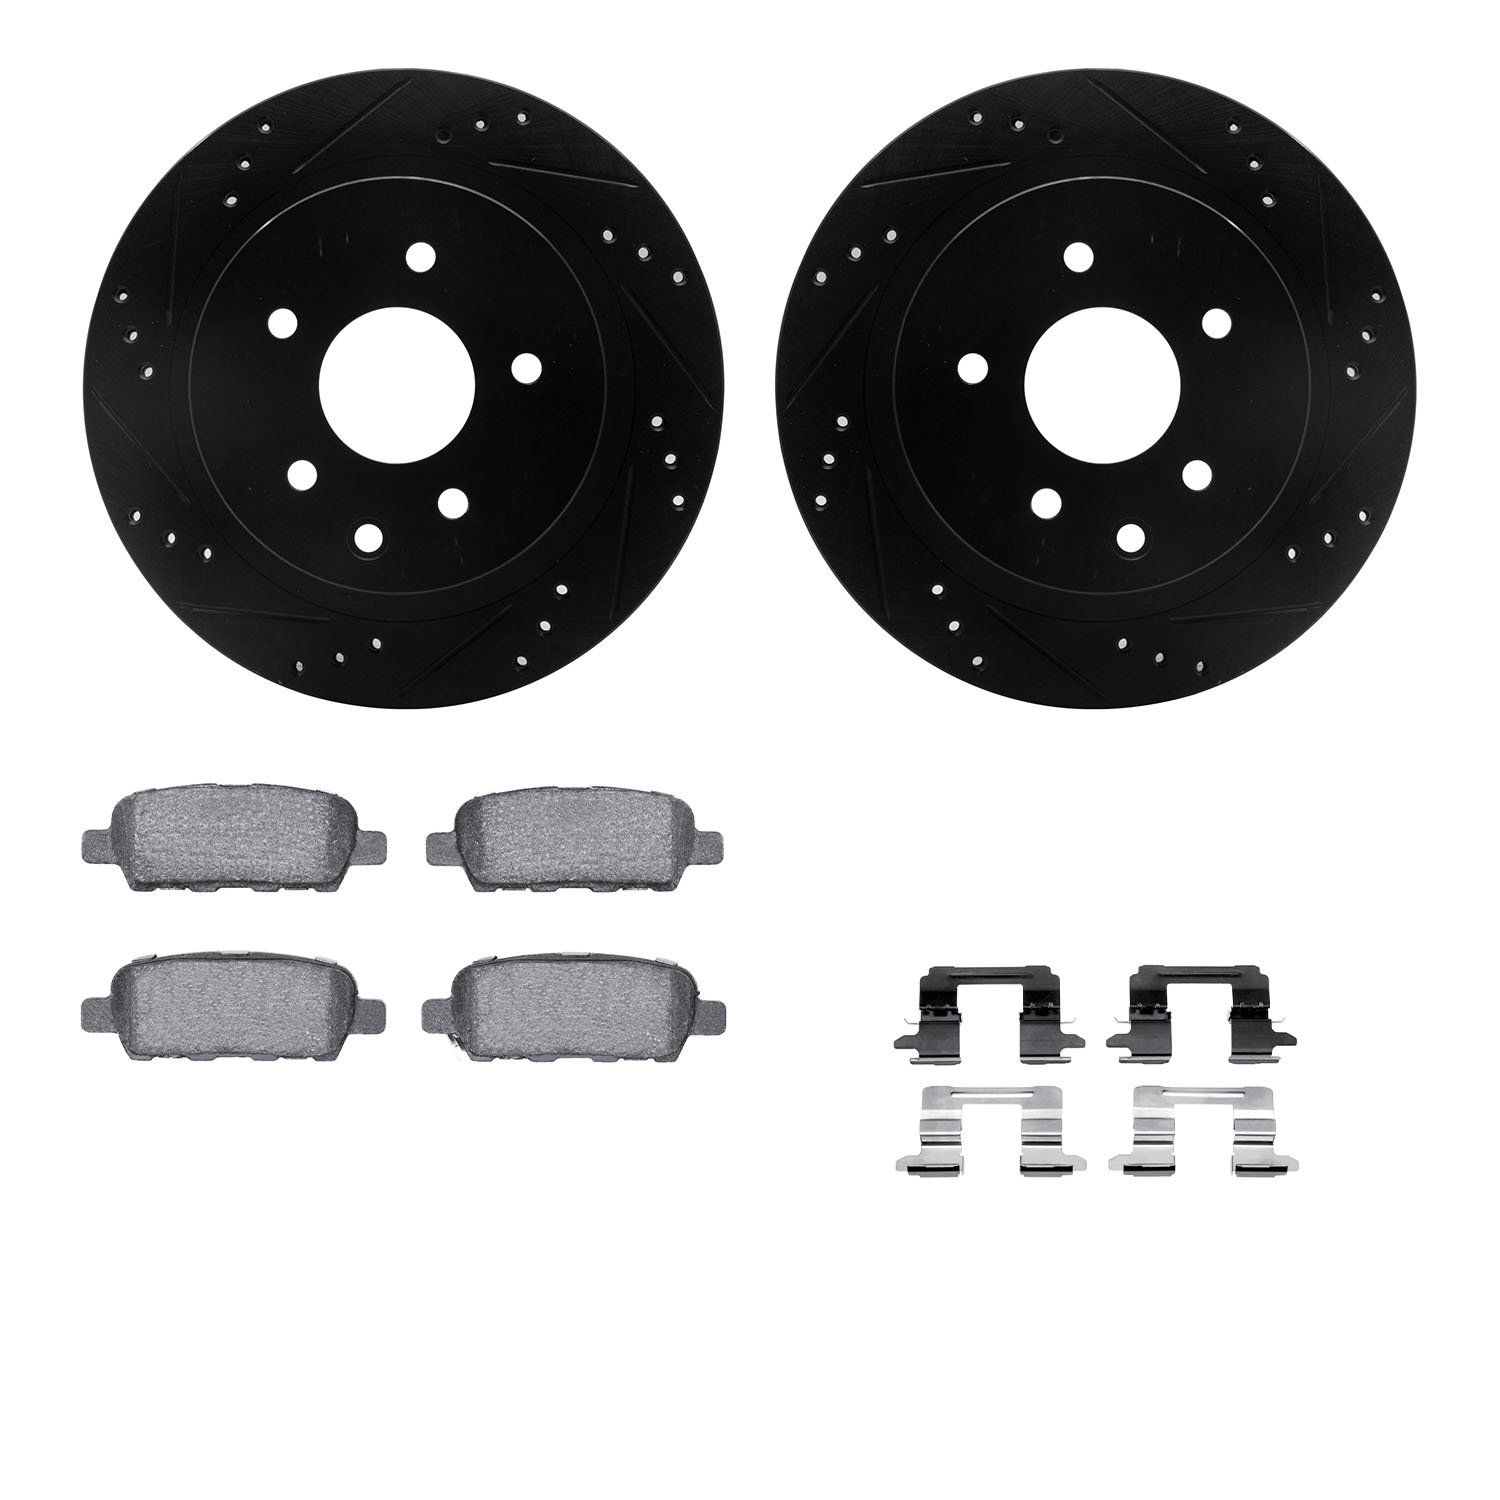 8512-67101 Drilled/Slotted Brake Rotors w/5000 Advanced Brake Pads Kit & Hardware [Black], Fits Select Multiple Makes/Models, Po